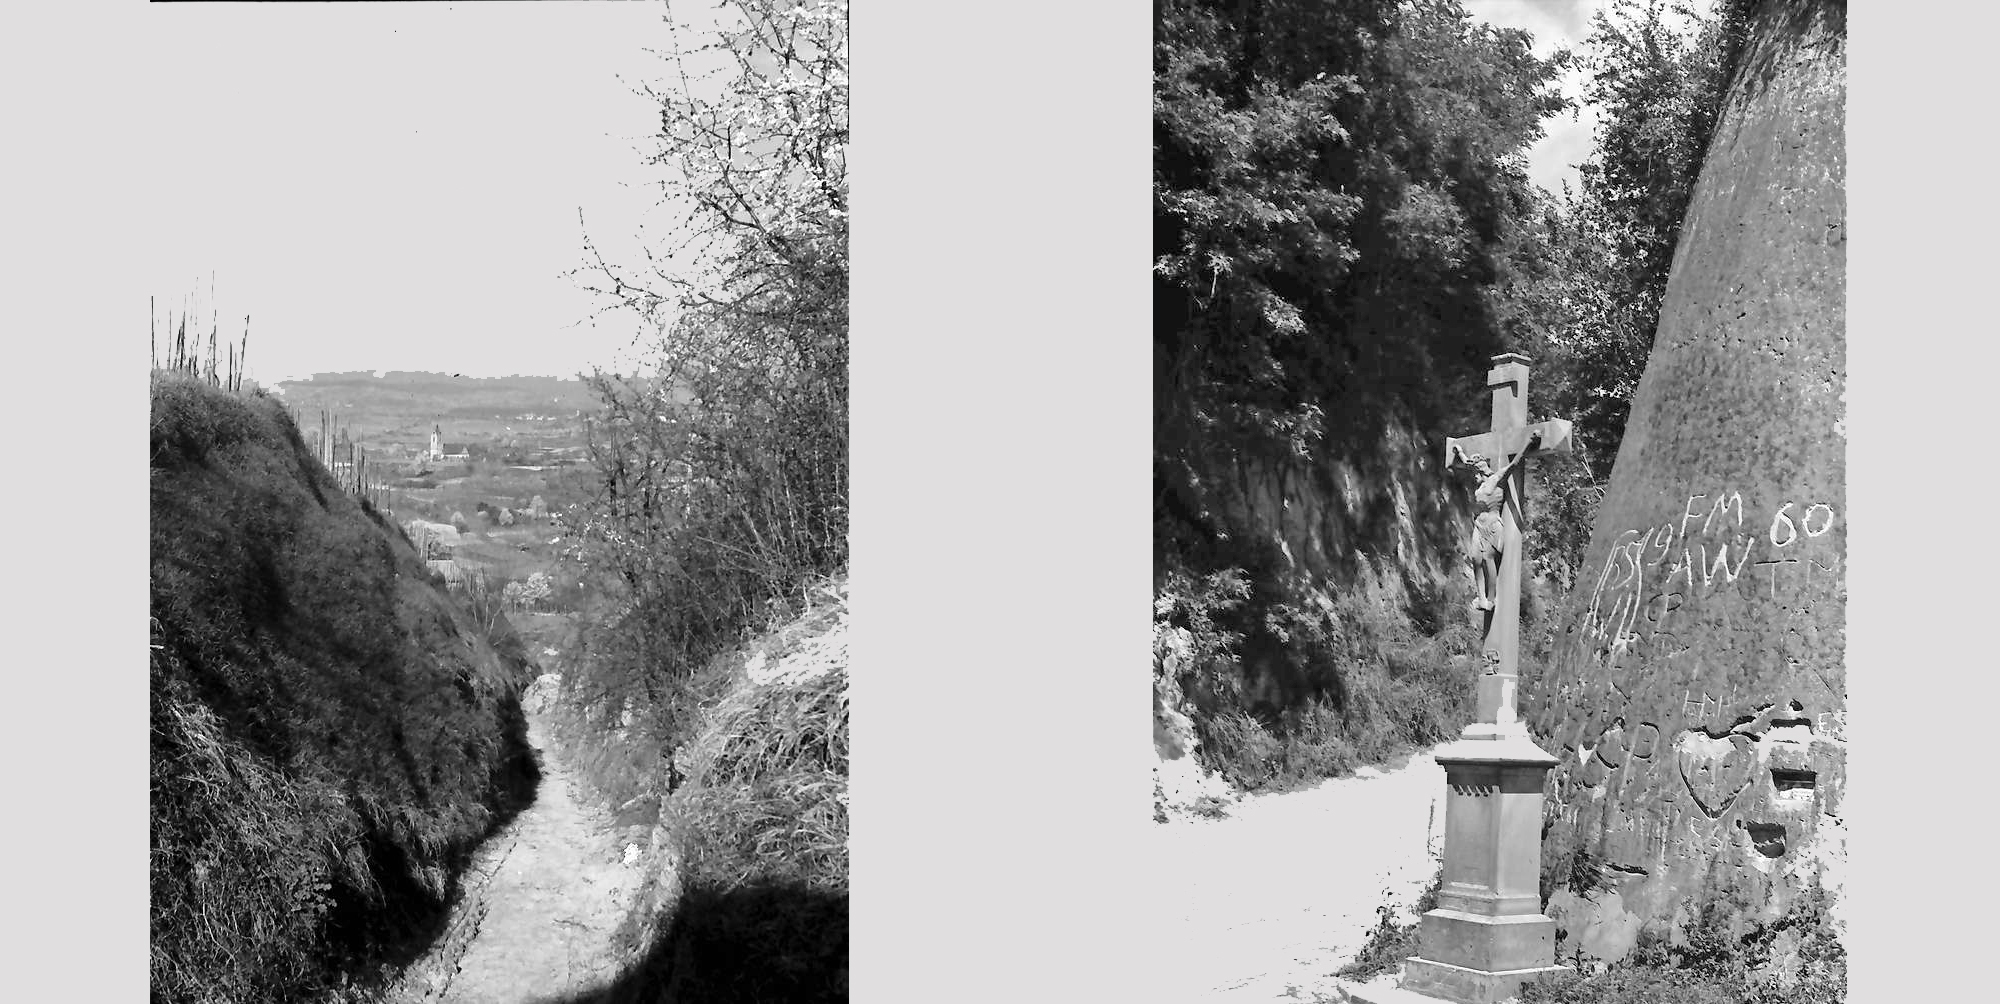 Hohlweg in den Weinbergen bei Endingen, 11. April 1952 (links) und Kreuz am Hohlweg des Turmbergs bei Merdingen, 28. Juli 1961 (rechts). Quelle LABW StAF, Sammlung Willy Pragher W 134 Nr. 022267 und 065103a.